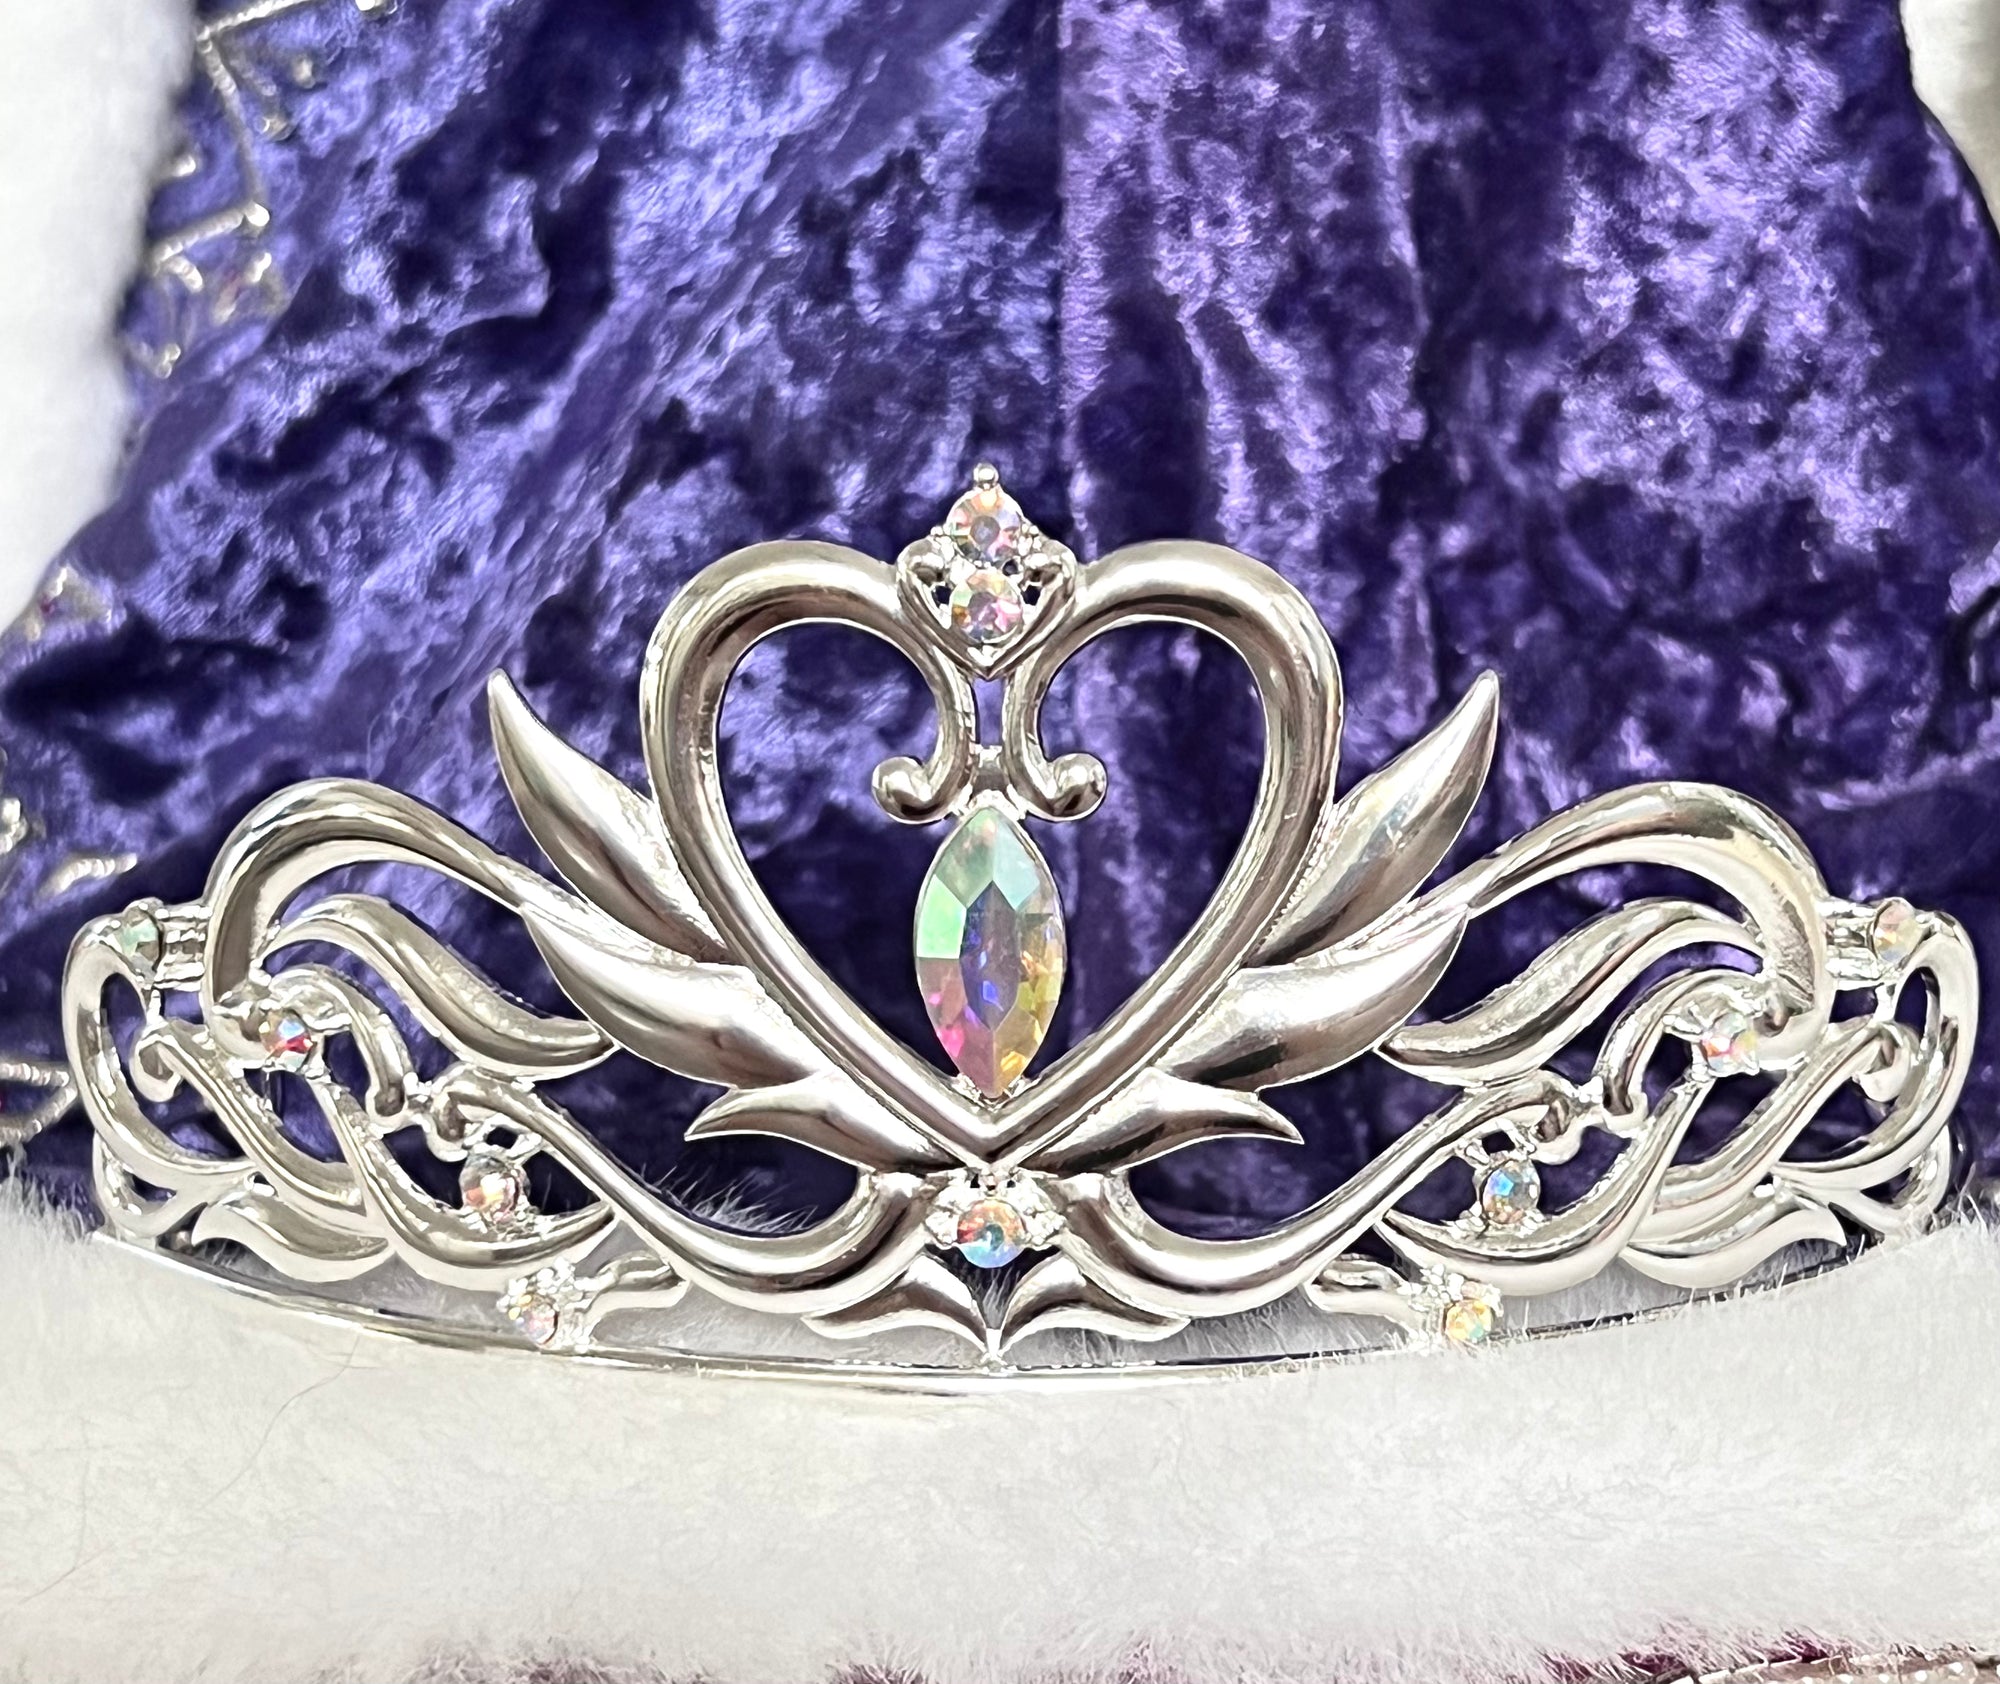 Silver Serenity Queen Moon Tiara Sailor Crystal Rhinestone Metal Crown Princess Cosplay